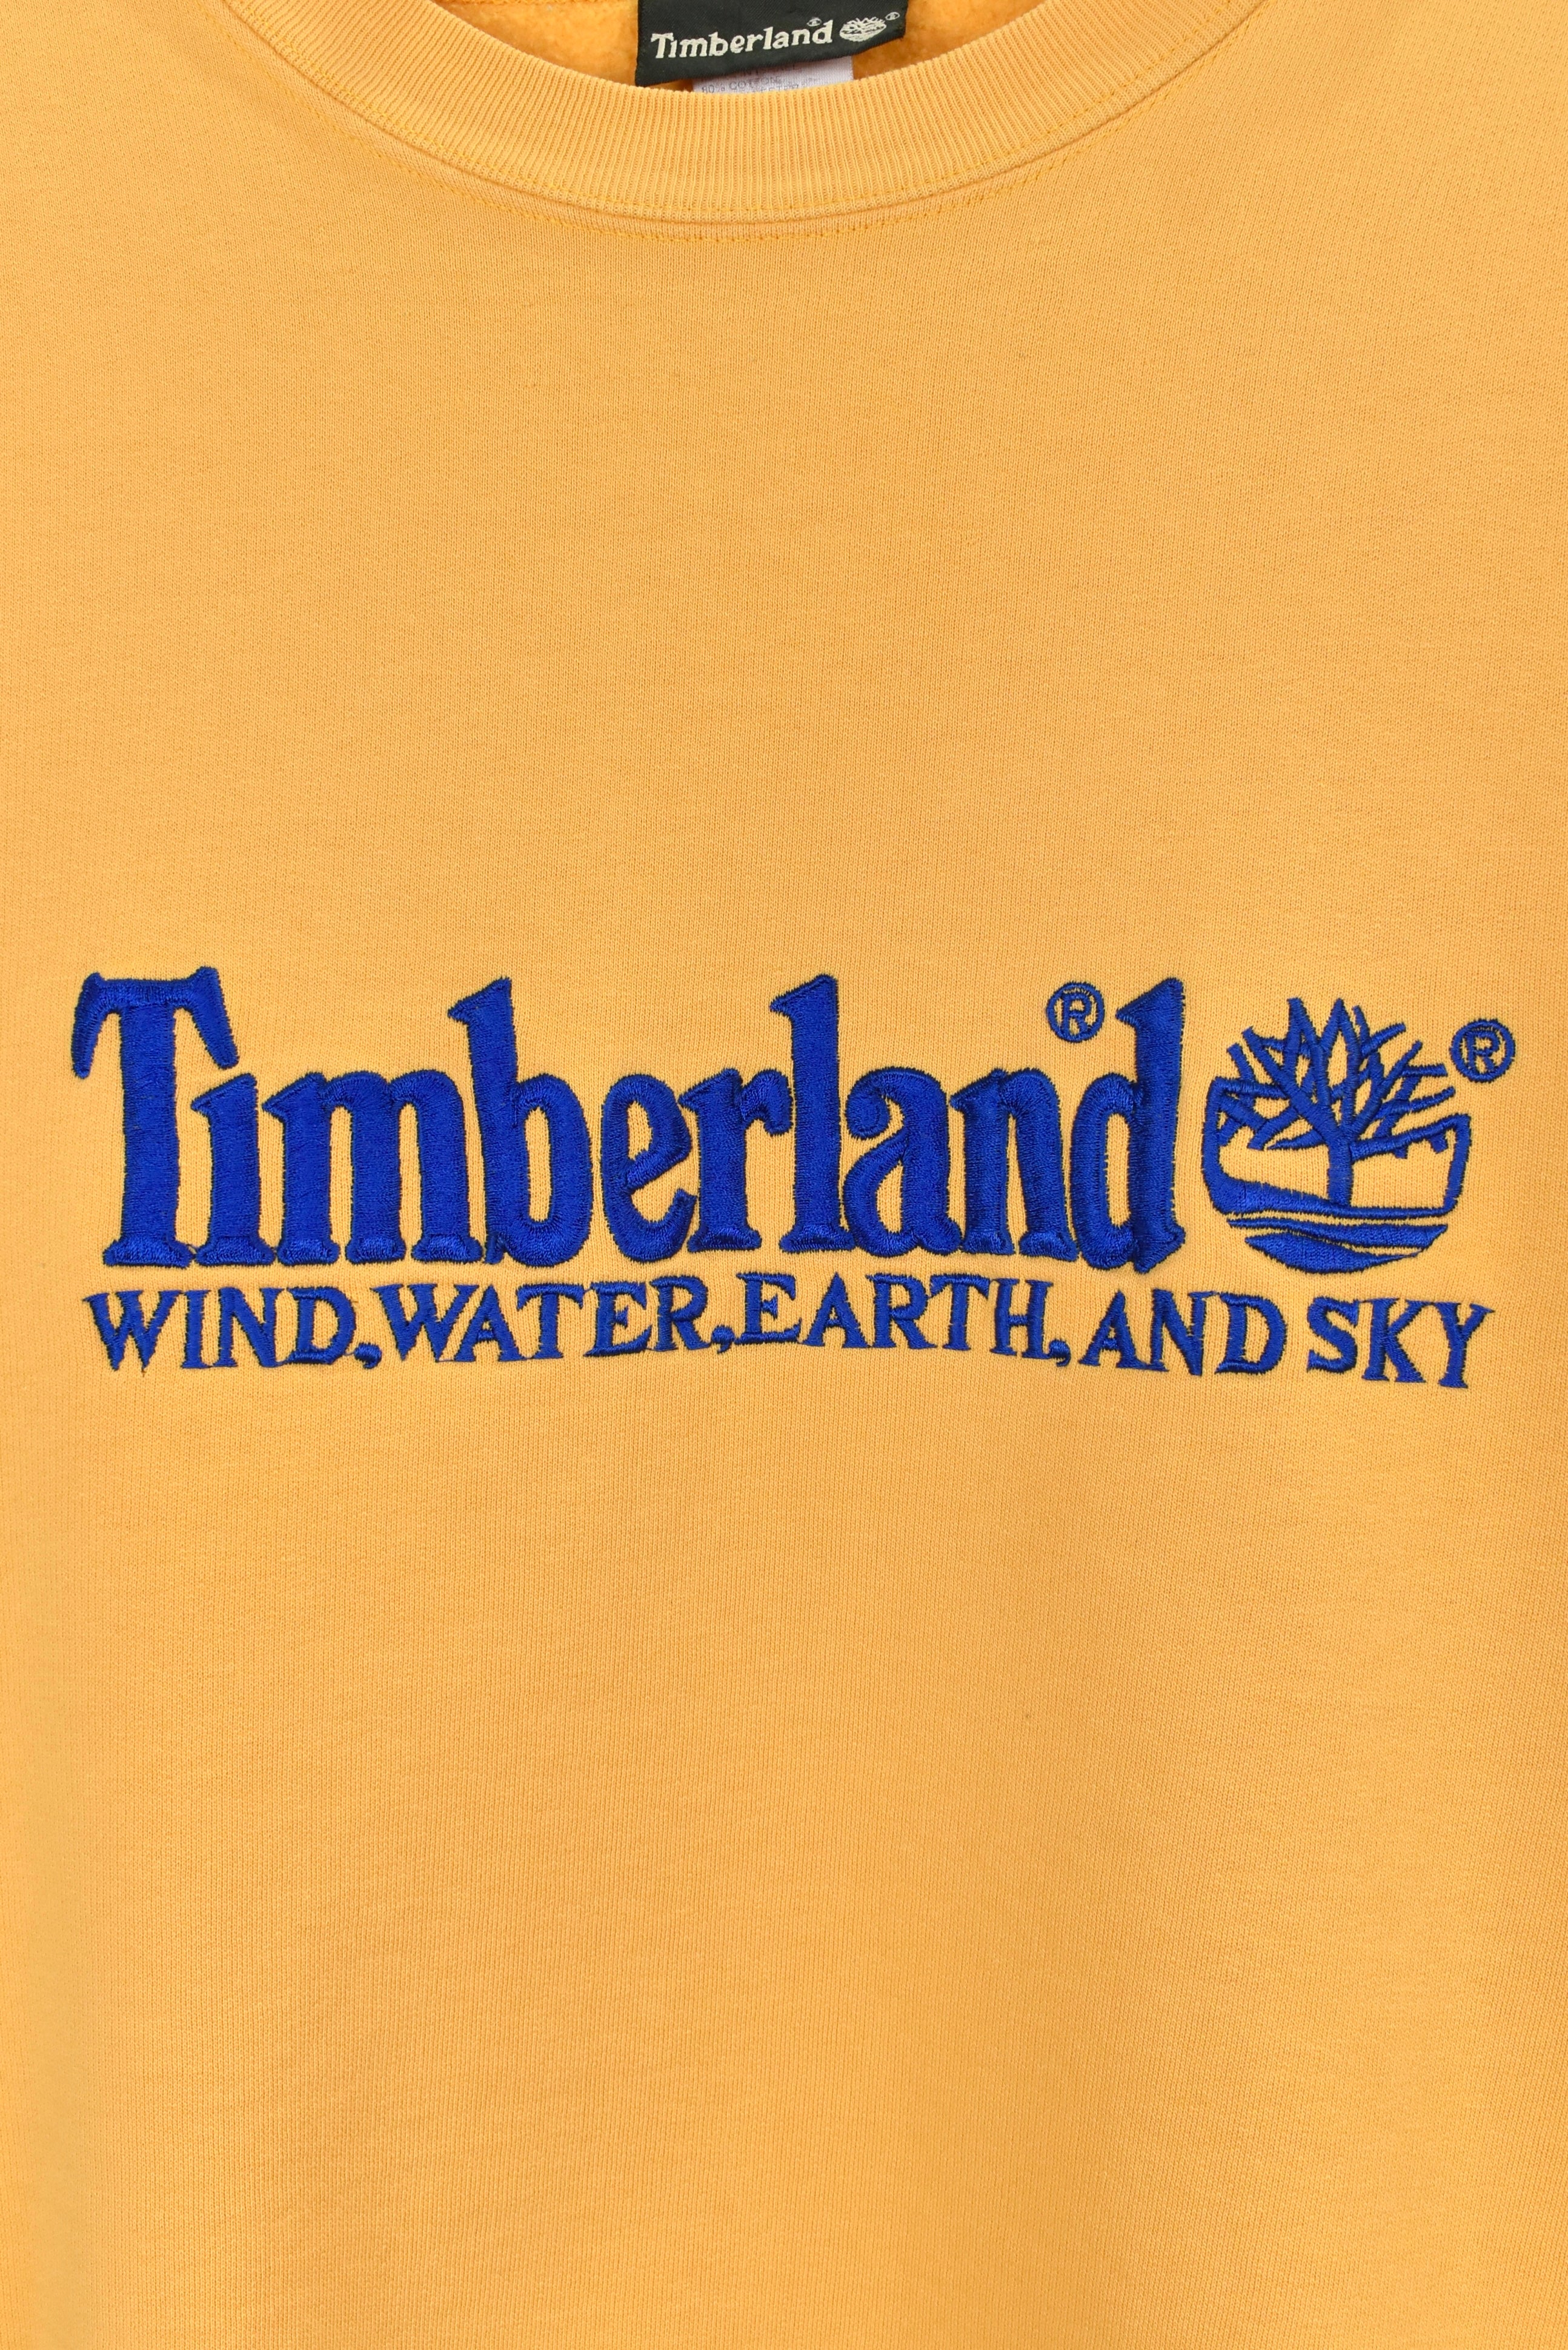 Vintage Timberland sweatshirt, yellow embroidered crewneck - M/L